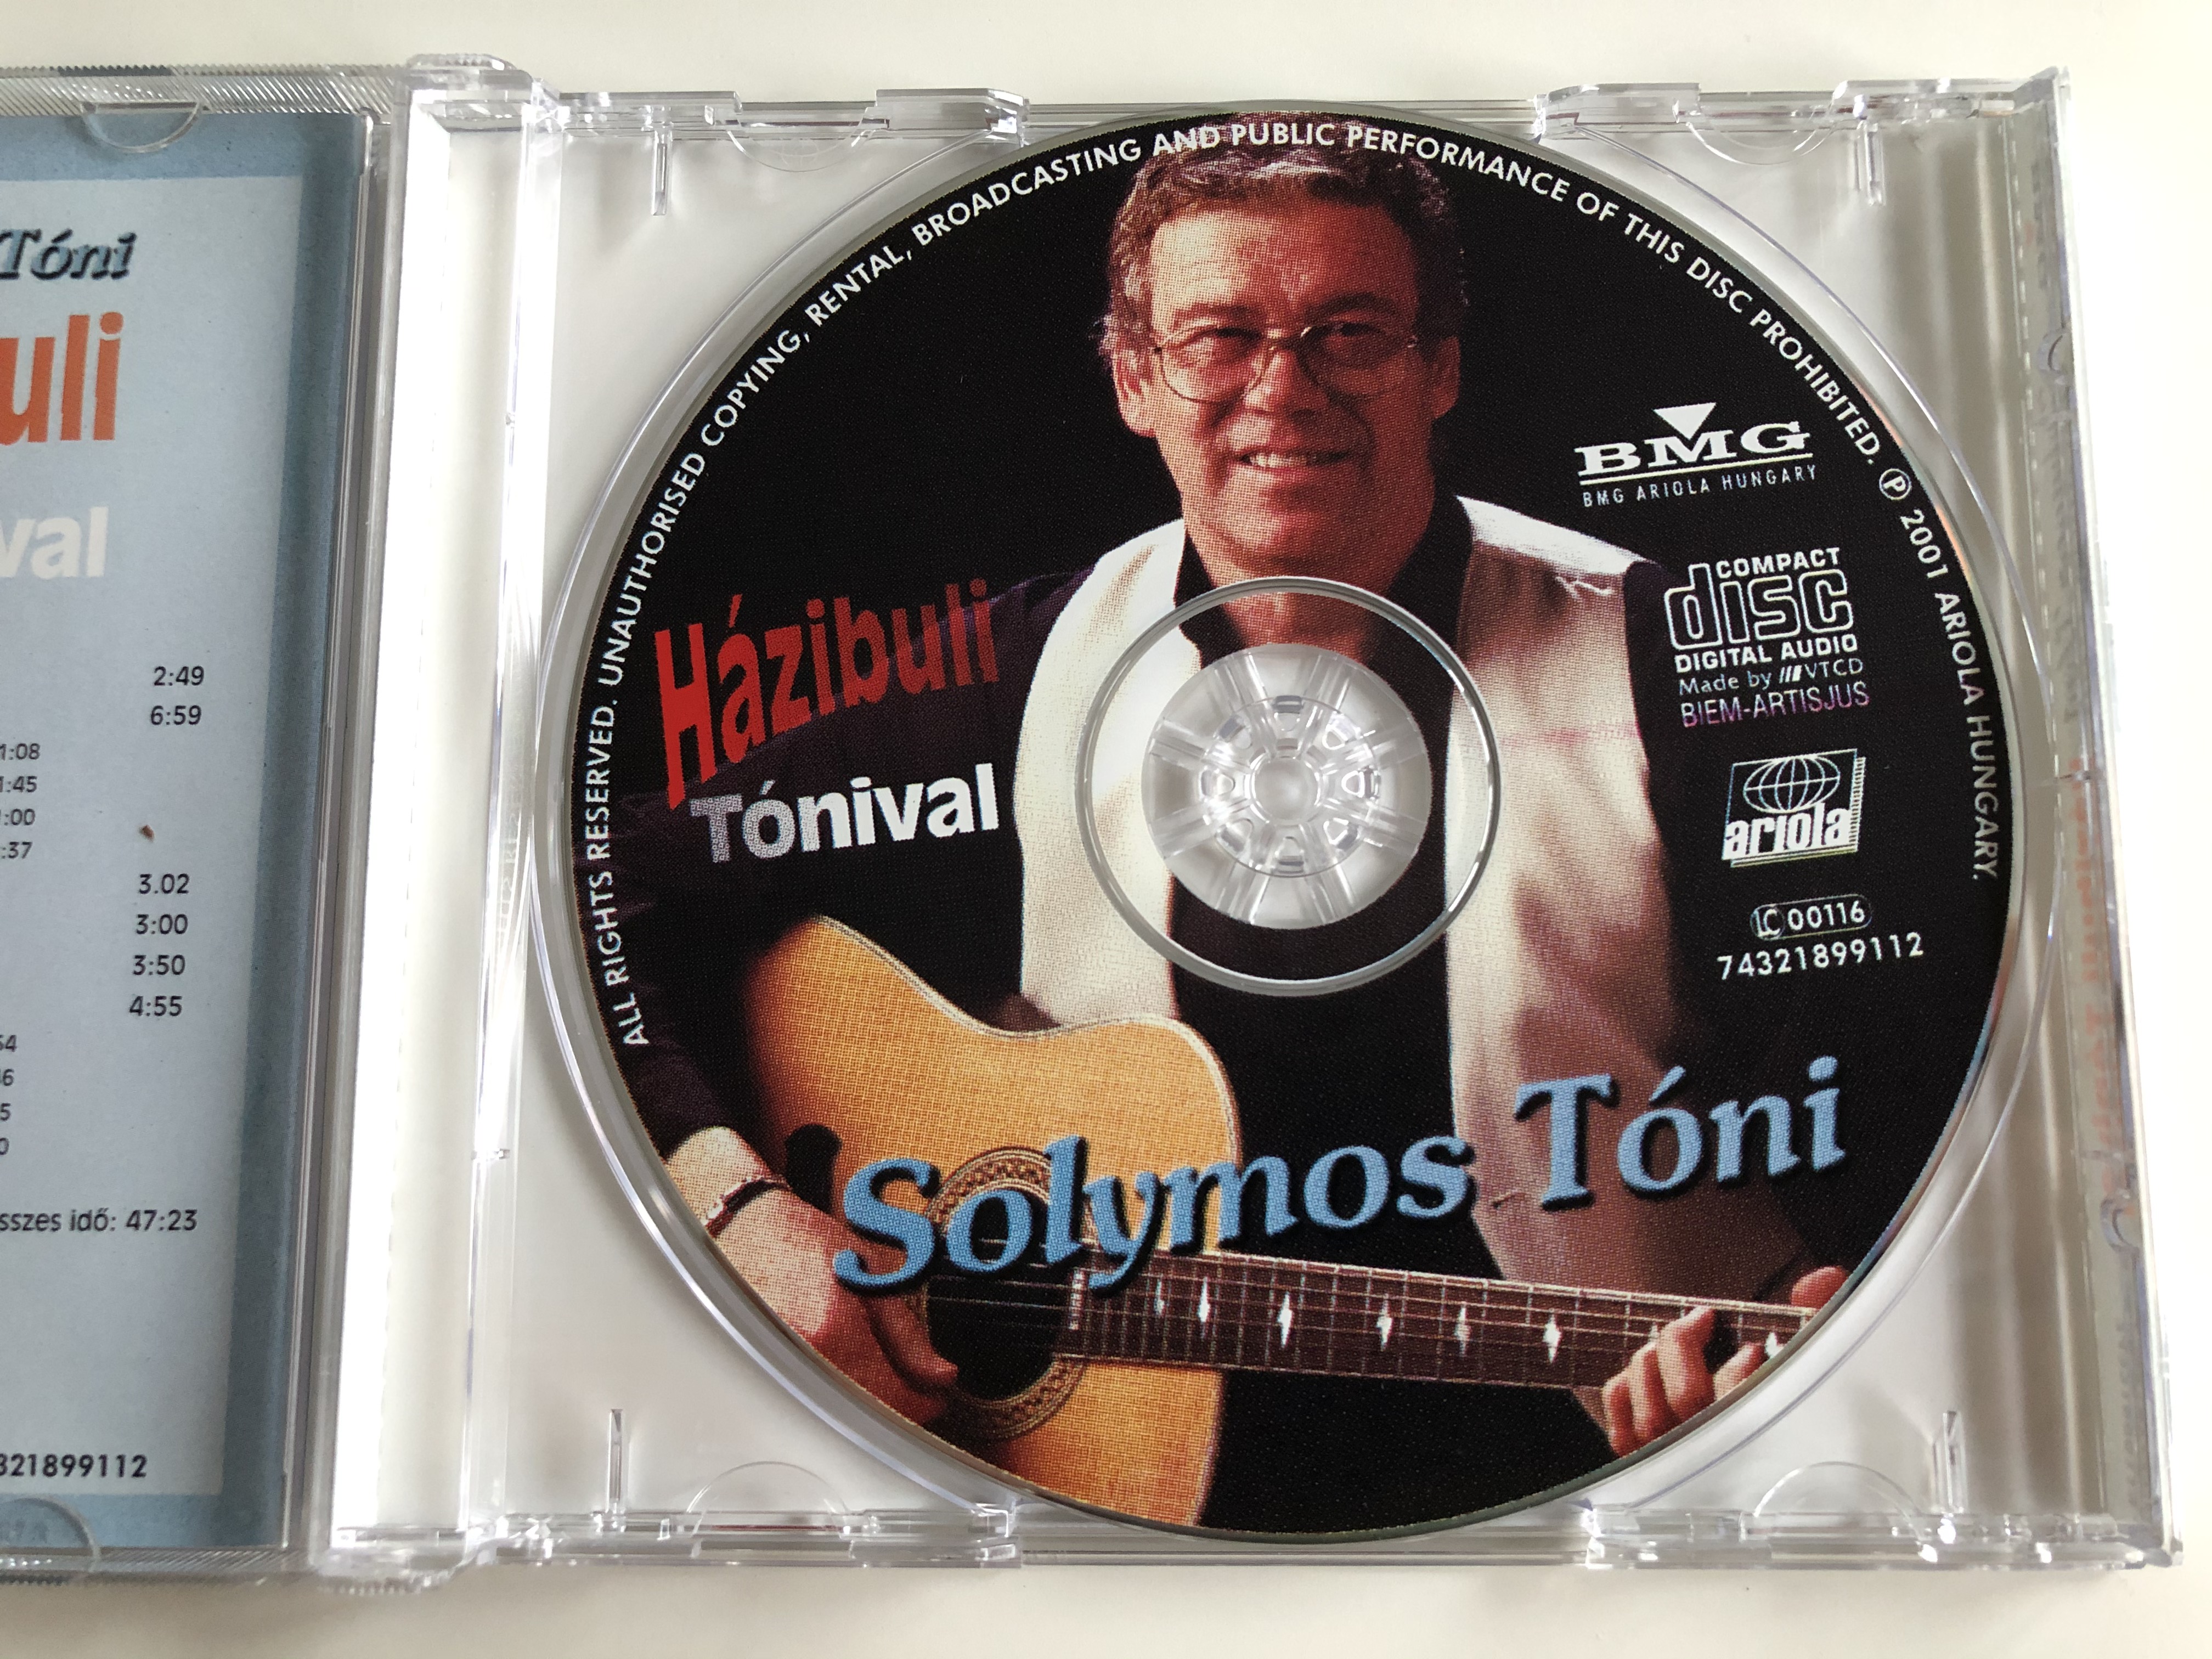 h-zibuli-t-nival-solymos-t-ni-bmg-ariola-hungary-audio-cd-2001-74321899112-4-.jpg